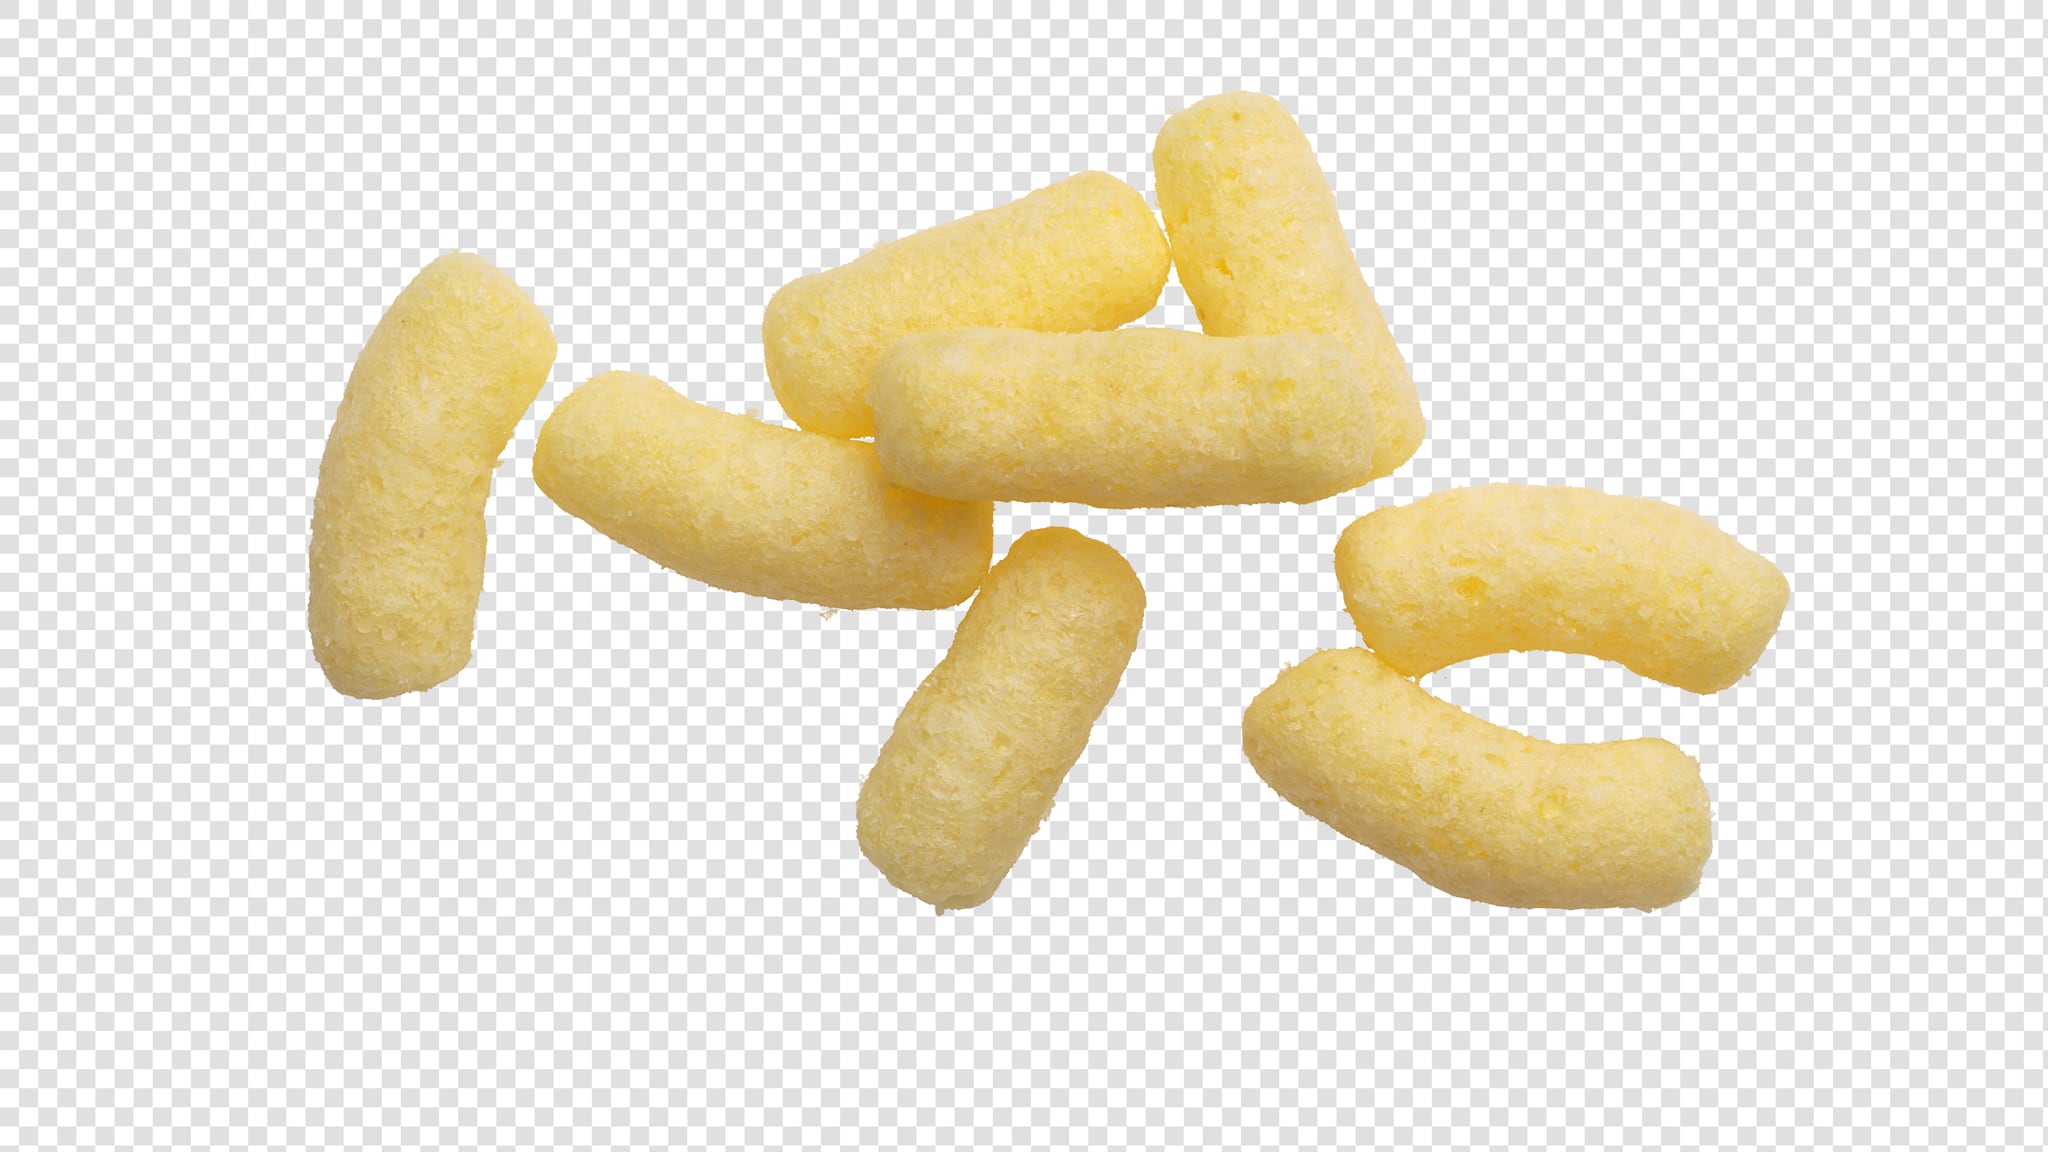 Corn sticks PSD image with transparent background